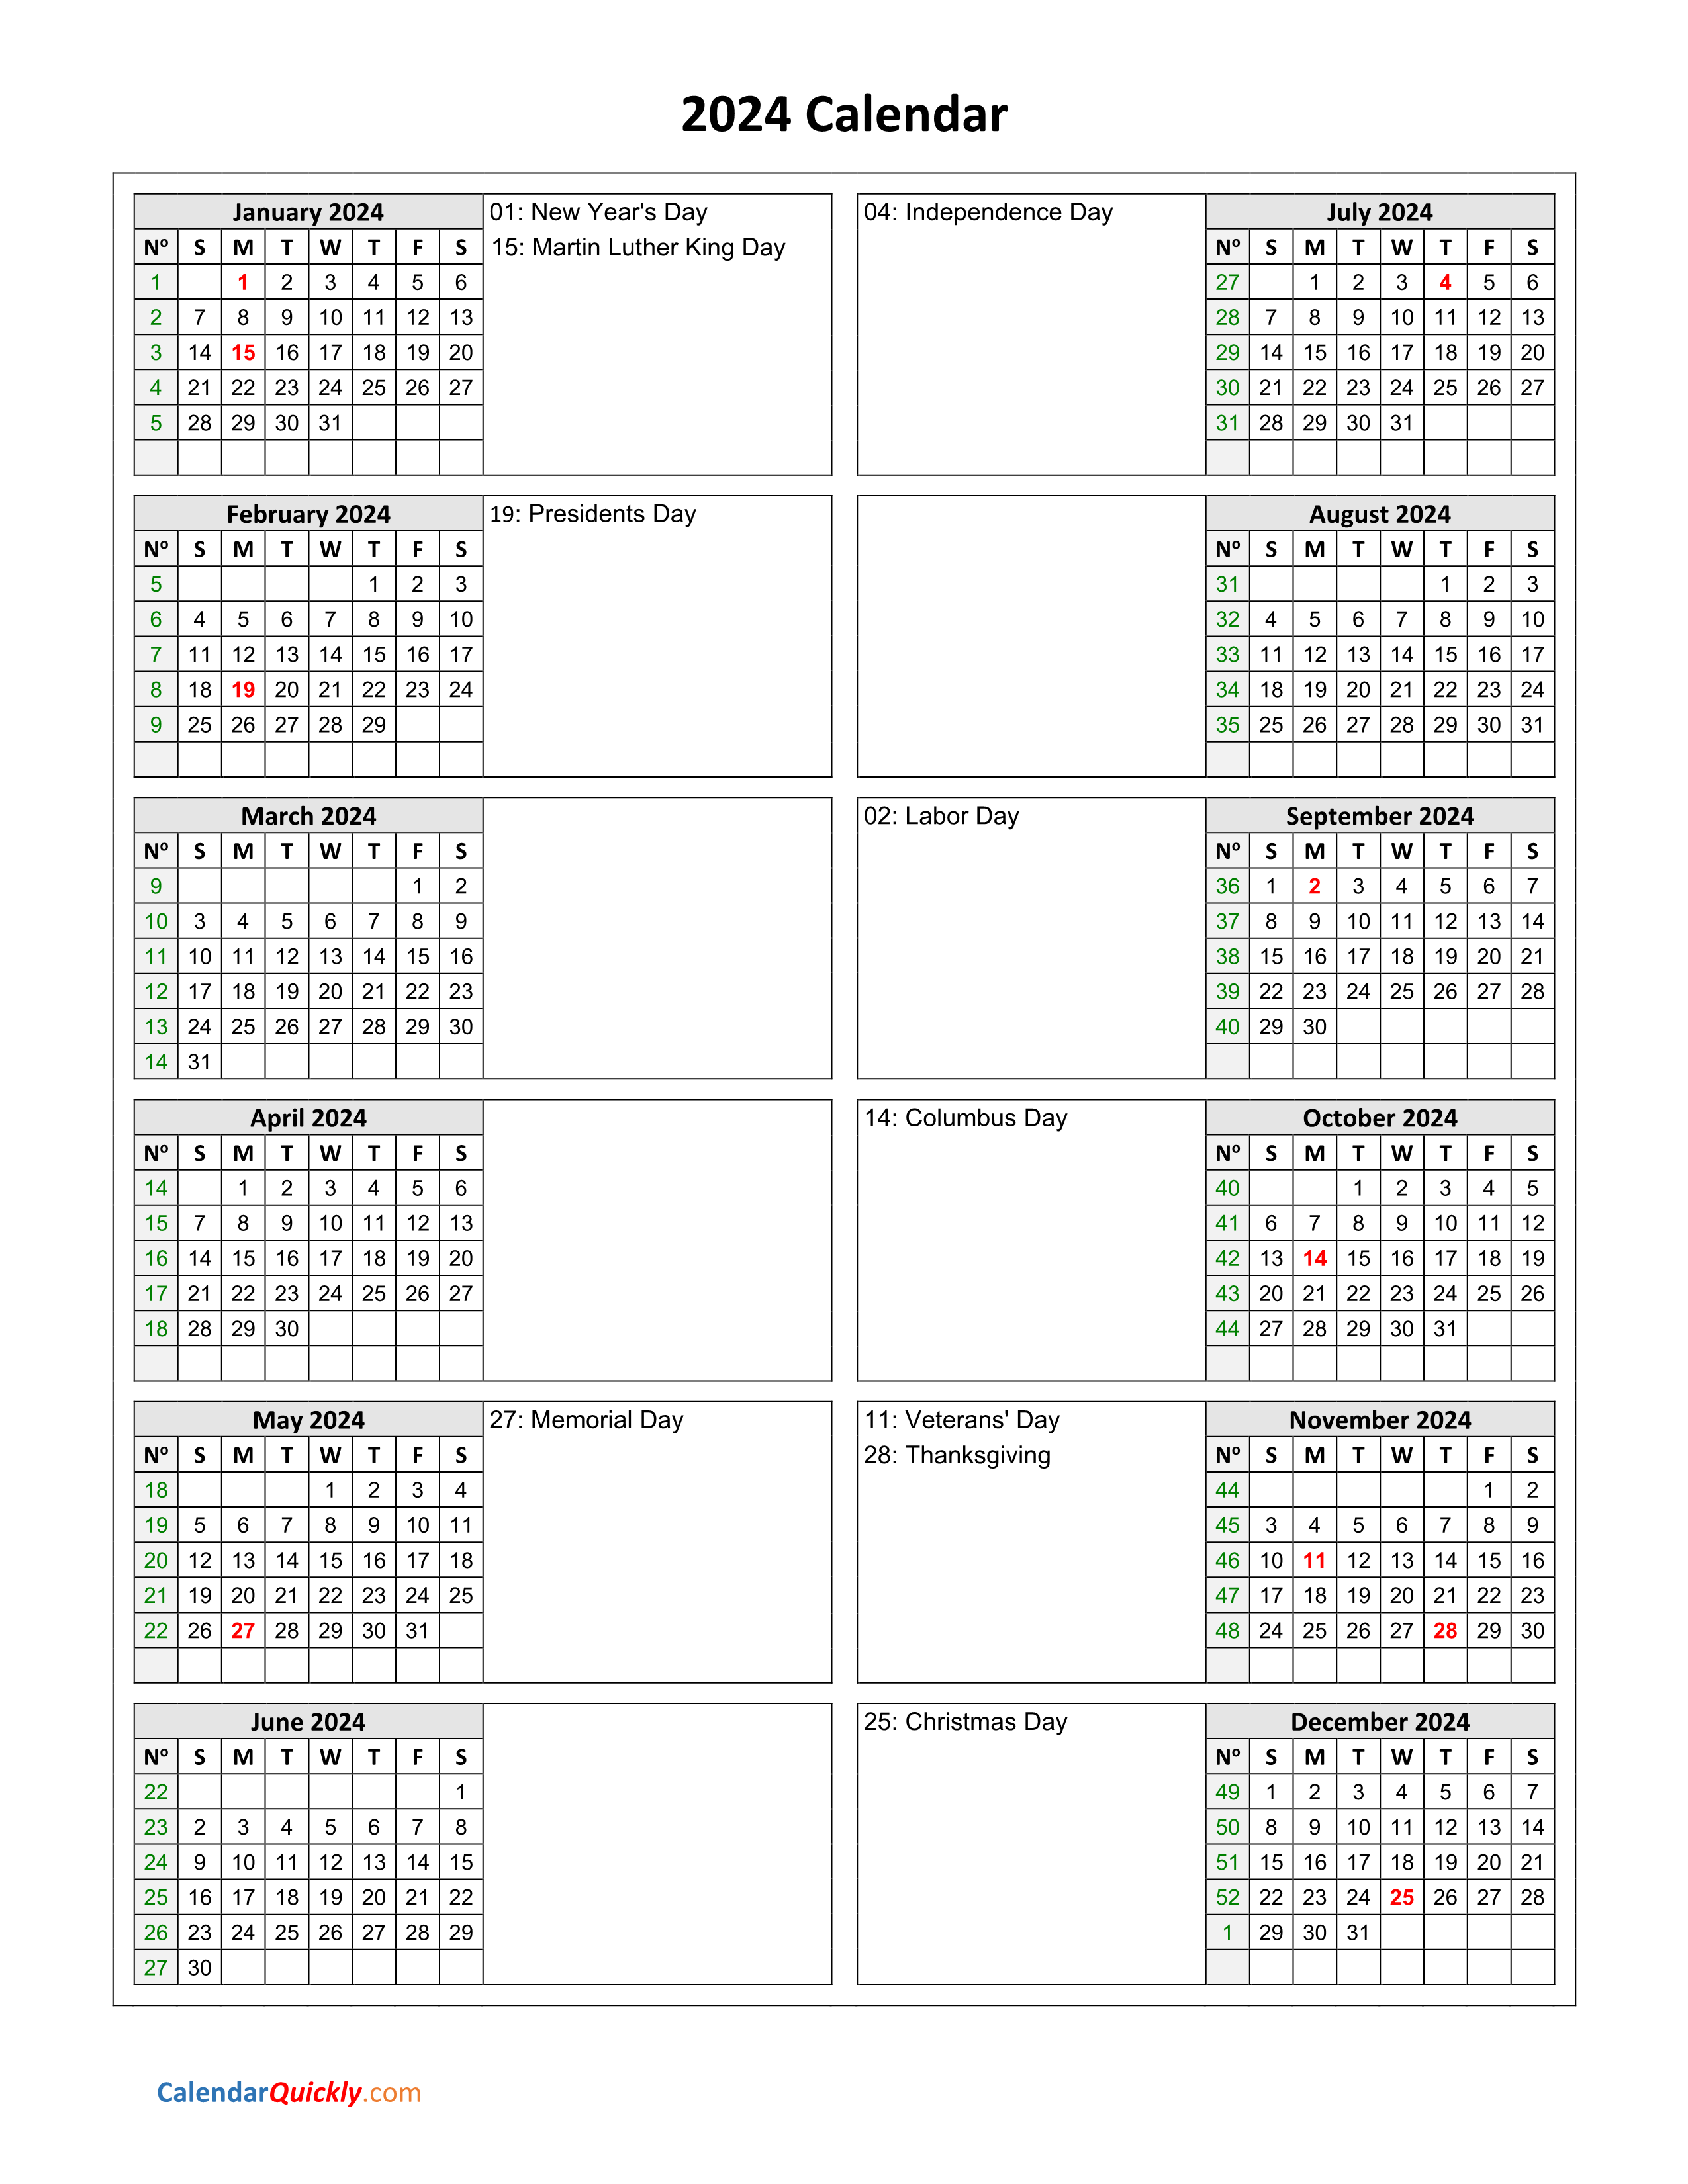 Printable Calendars 2024 Pdf Calendar 2024 With Federal Holidays - Free Printable 2024 Small Calendar With Holidays